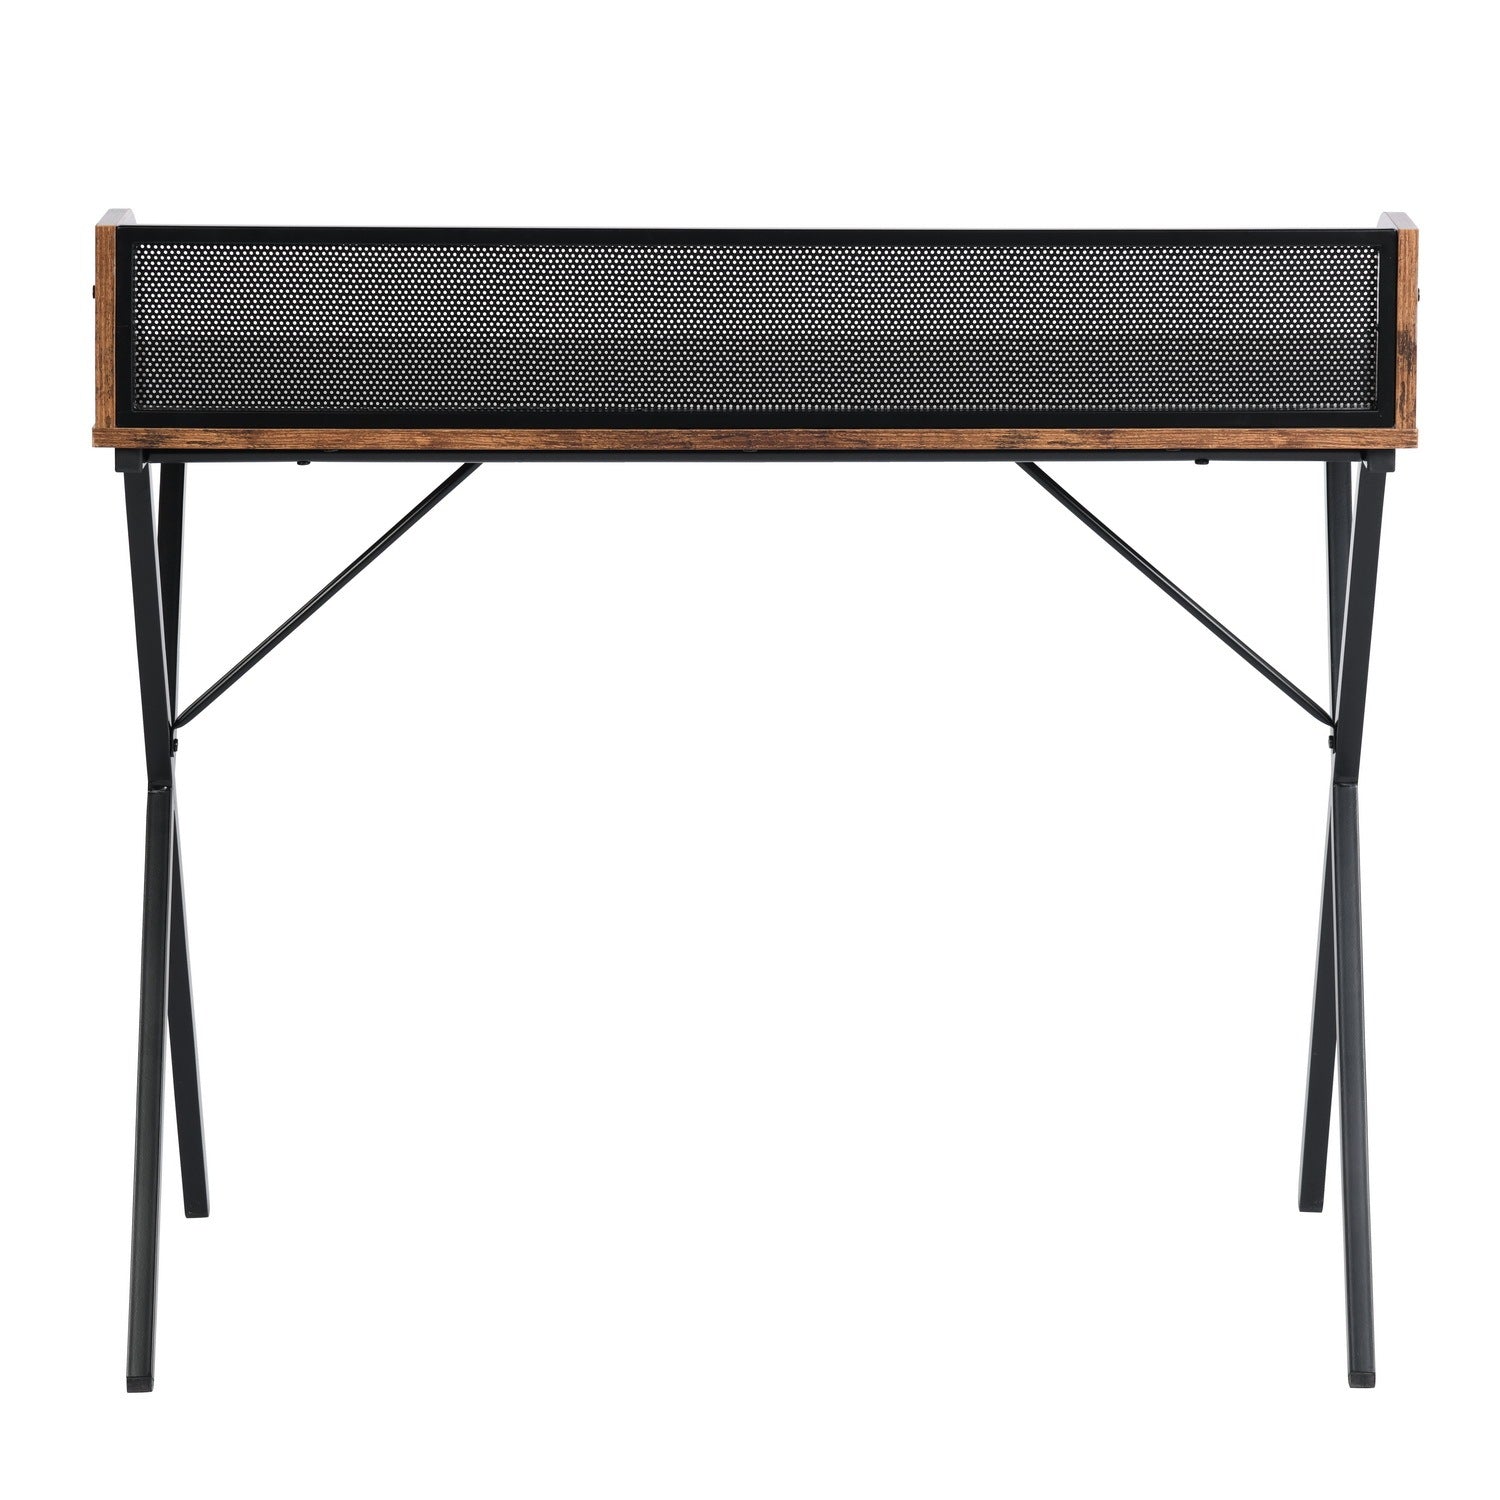 39.4"" L Rectangular Computer Desk, Writing Desk full black-office-poplar-rectangular-mdf-metal & wood